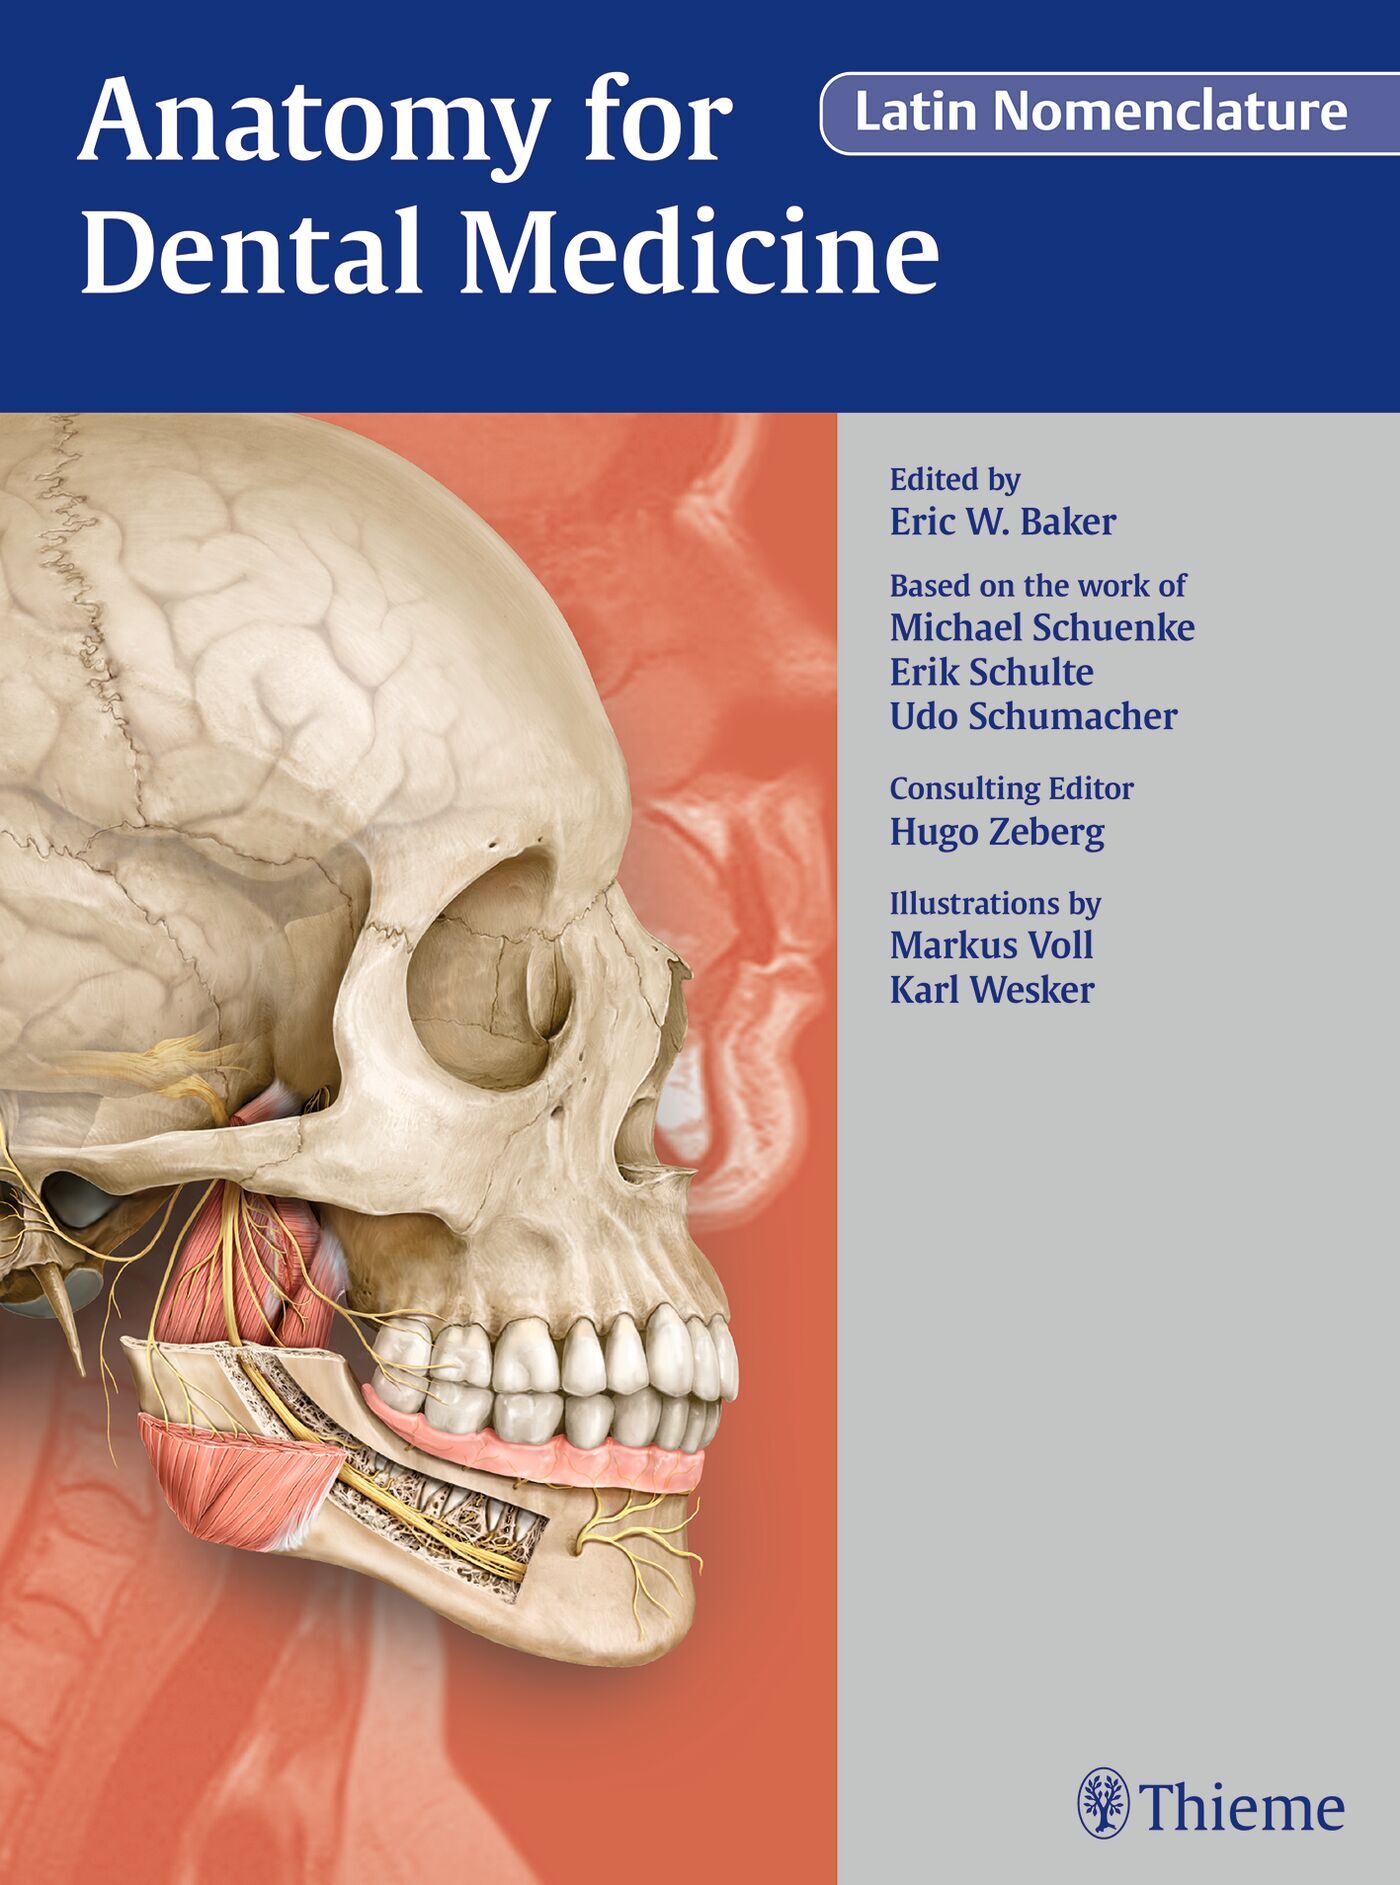 Anatomy for Dental Medicine, Latin Nomenclature, 9781626232389